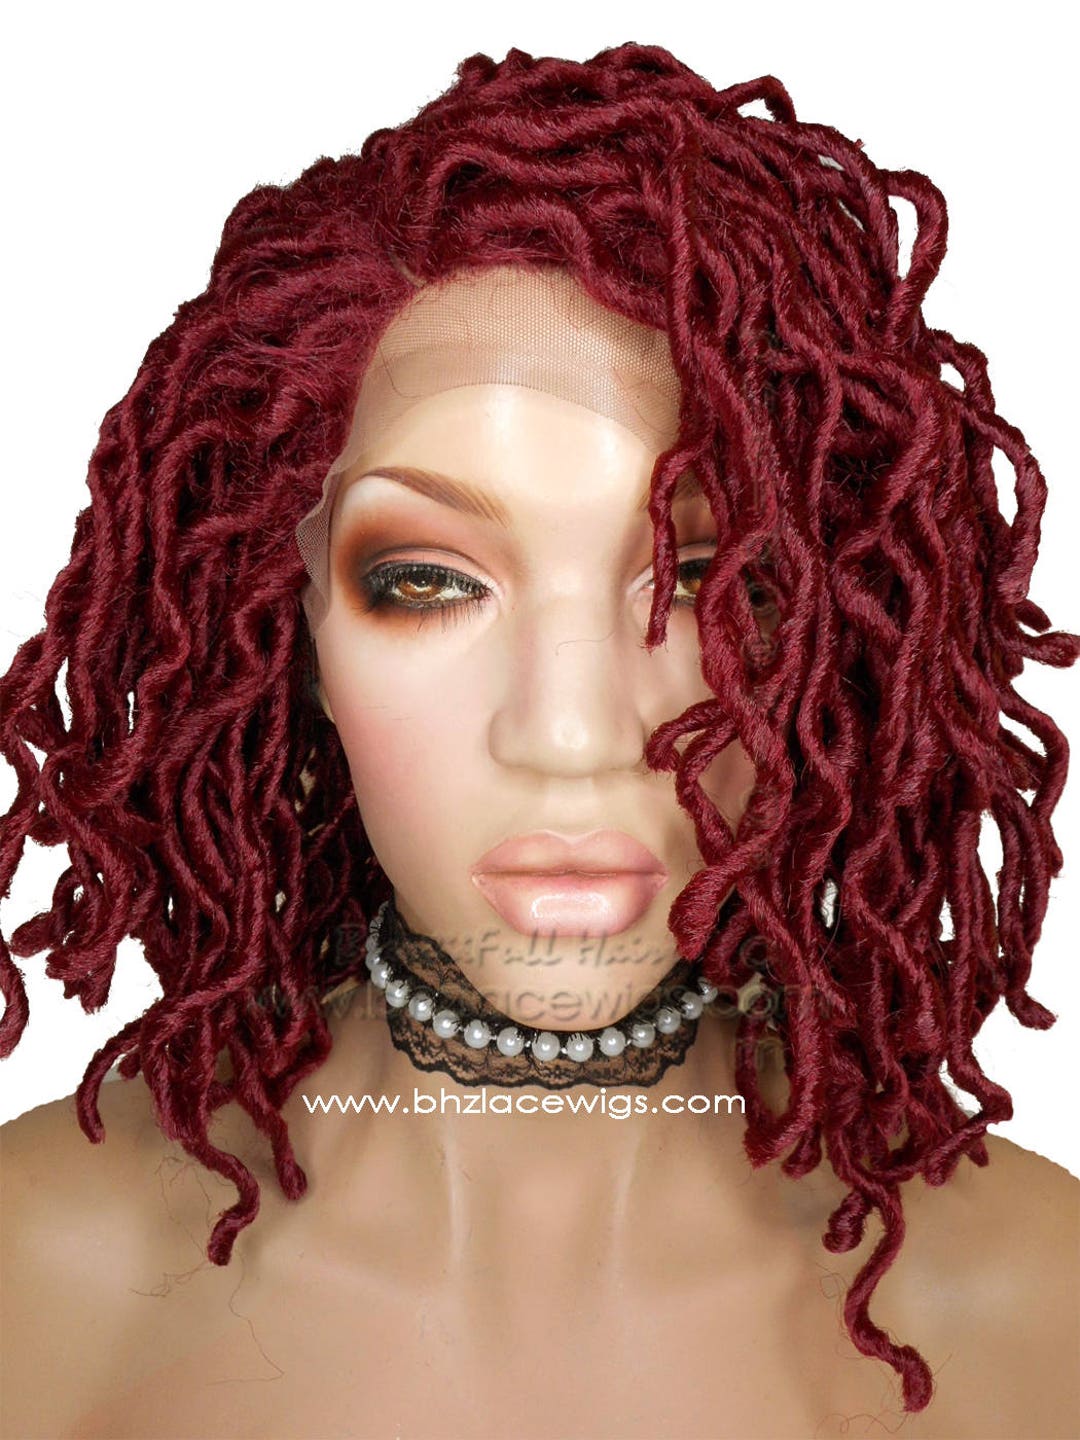 Wig Kits - Diva Maker Hair Prosthetics - Tailor make your own look